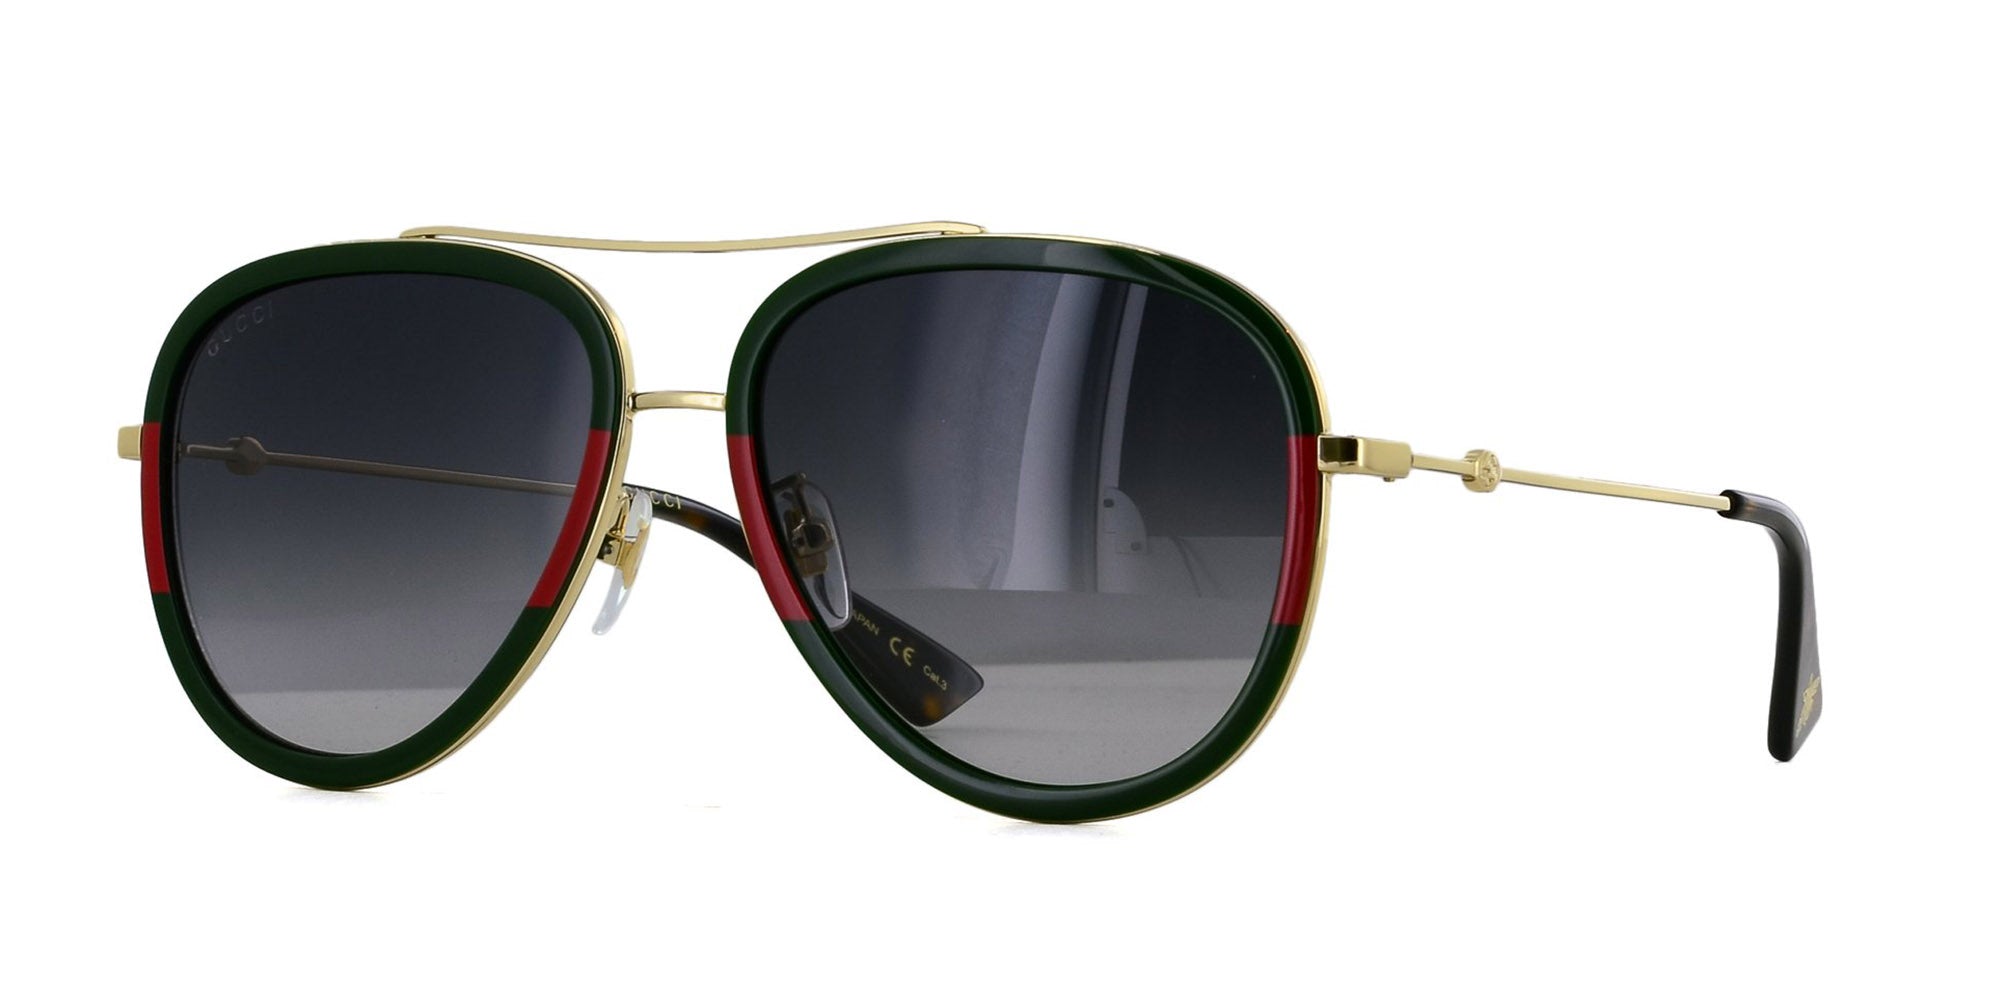 Gucci Aviator Sunglasses, Gold/White | Gold aviator sunglasses, Aviator  sunglasses, Sunglasses